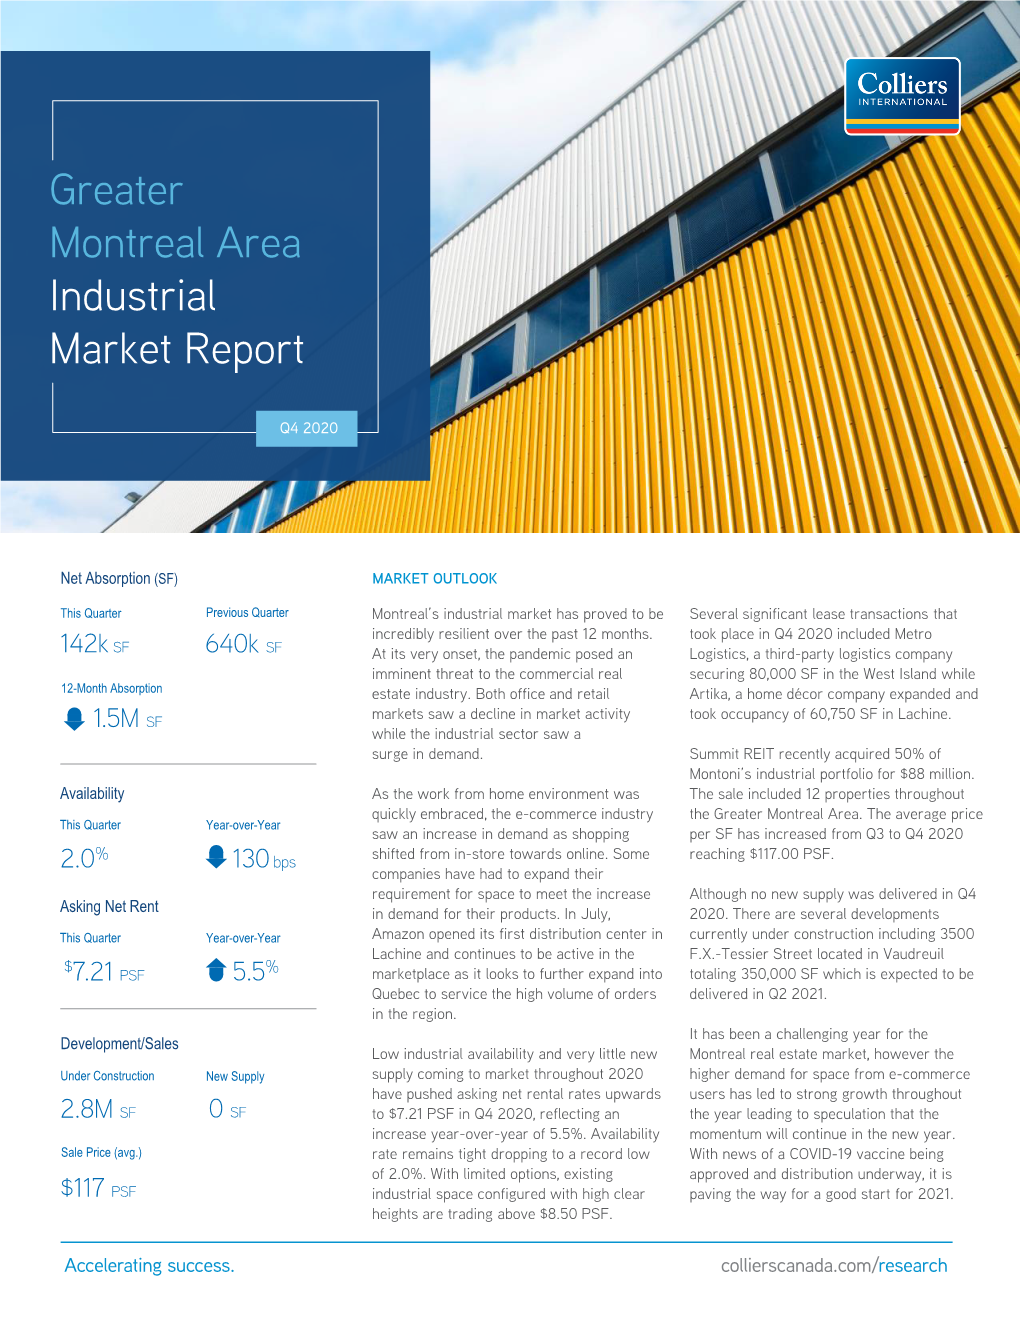 Greater Montreal Area Industrial Market Report